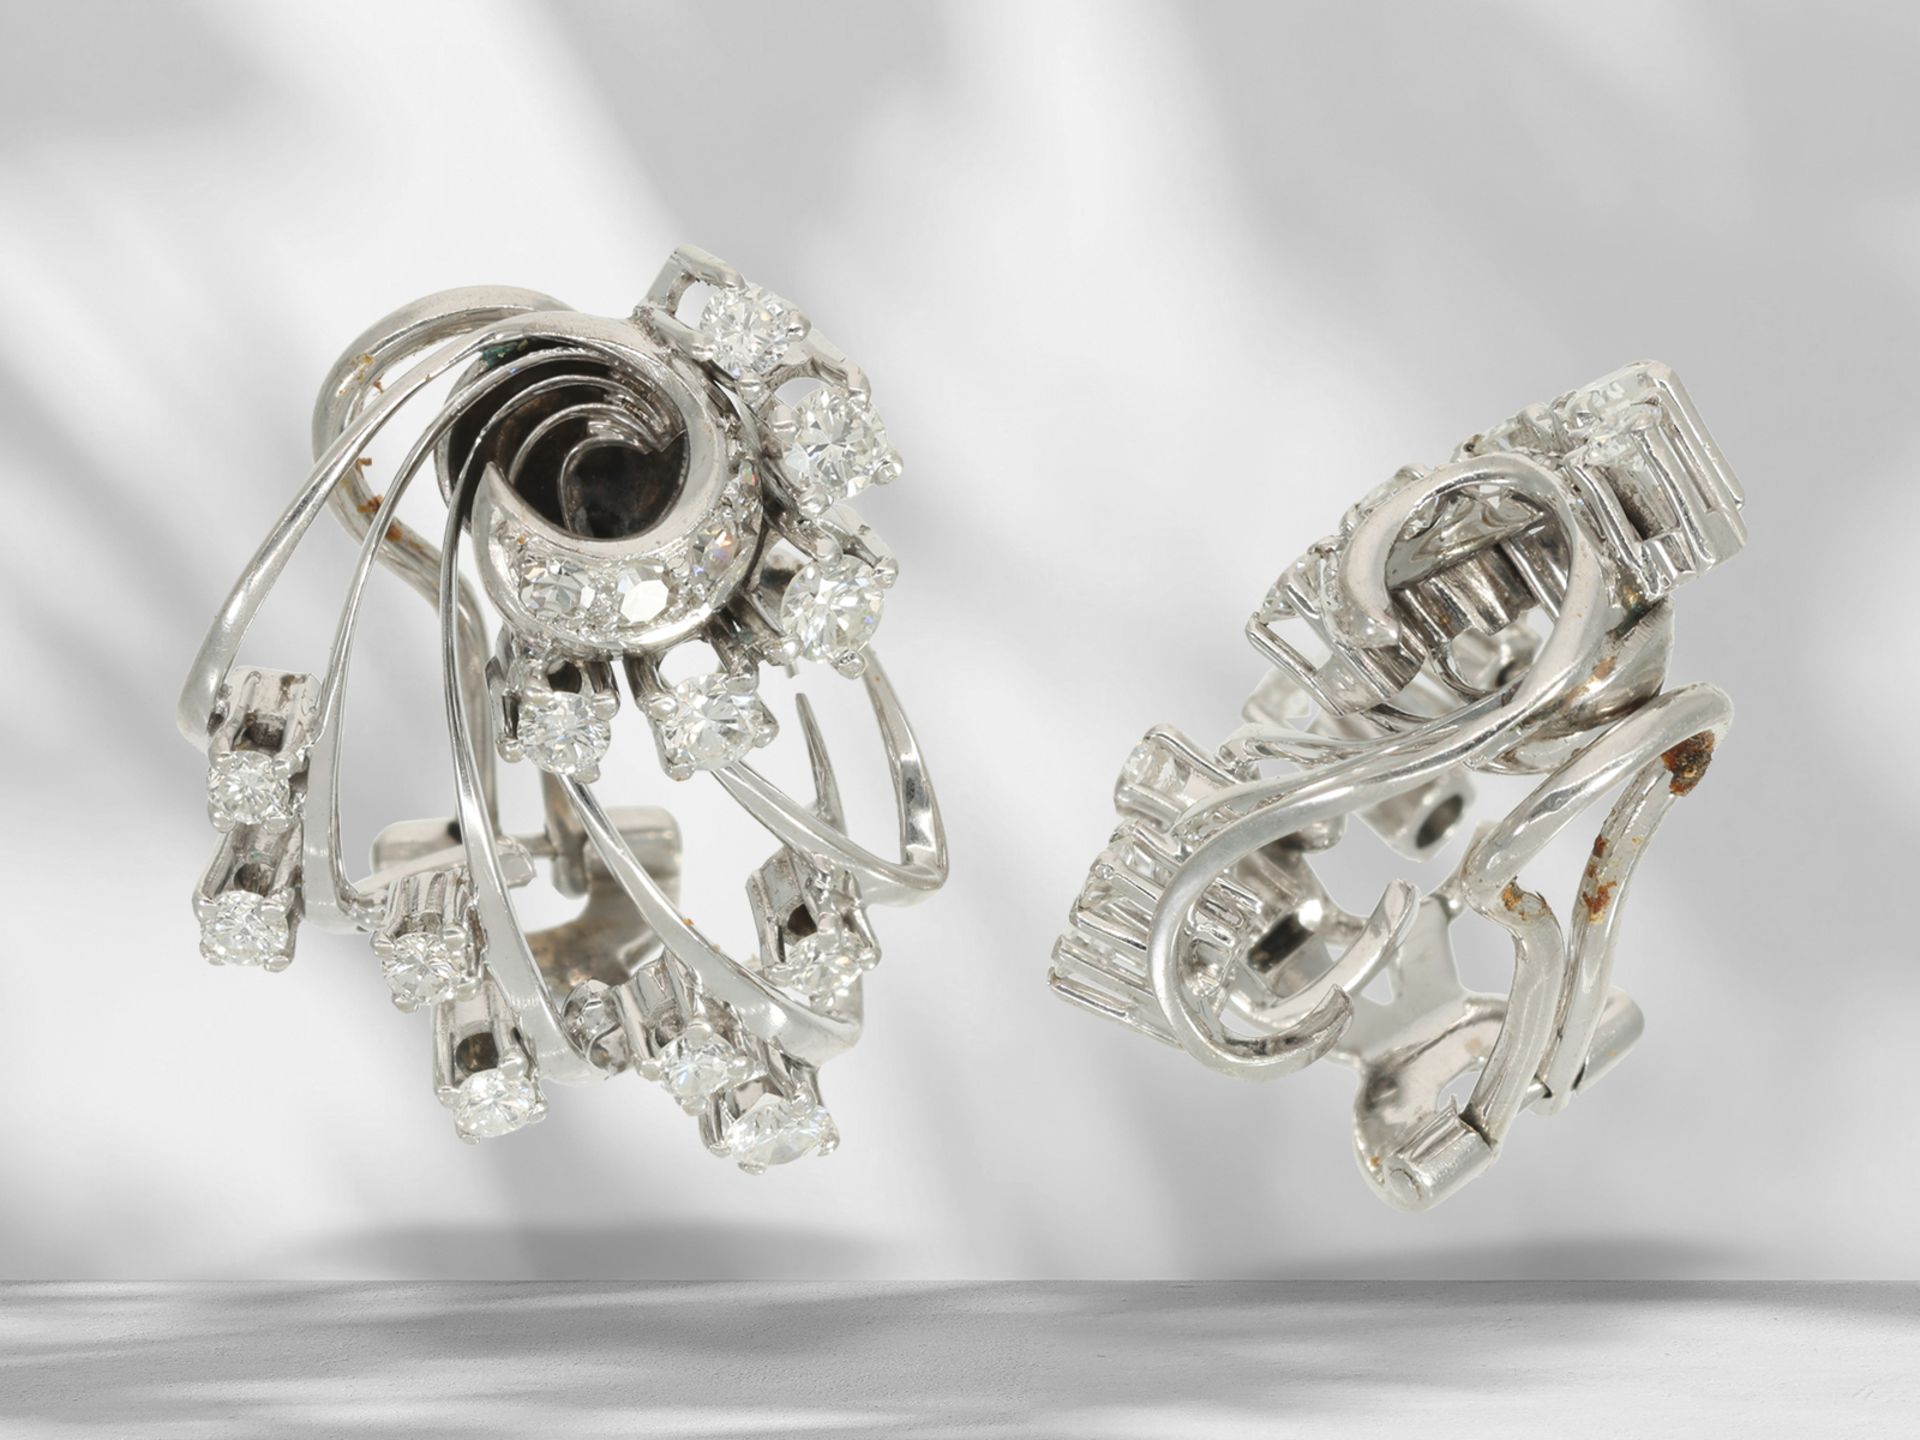 Earrings: decorative designer goldsmith work with brilliant-cut diamonds, 18K white gold, handmade b - Image 4 of 4